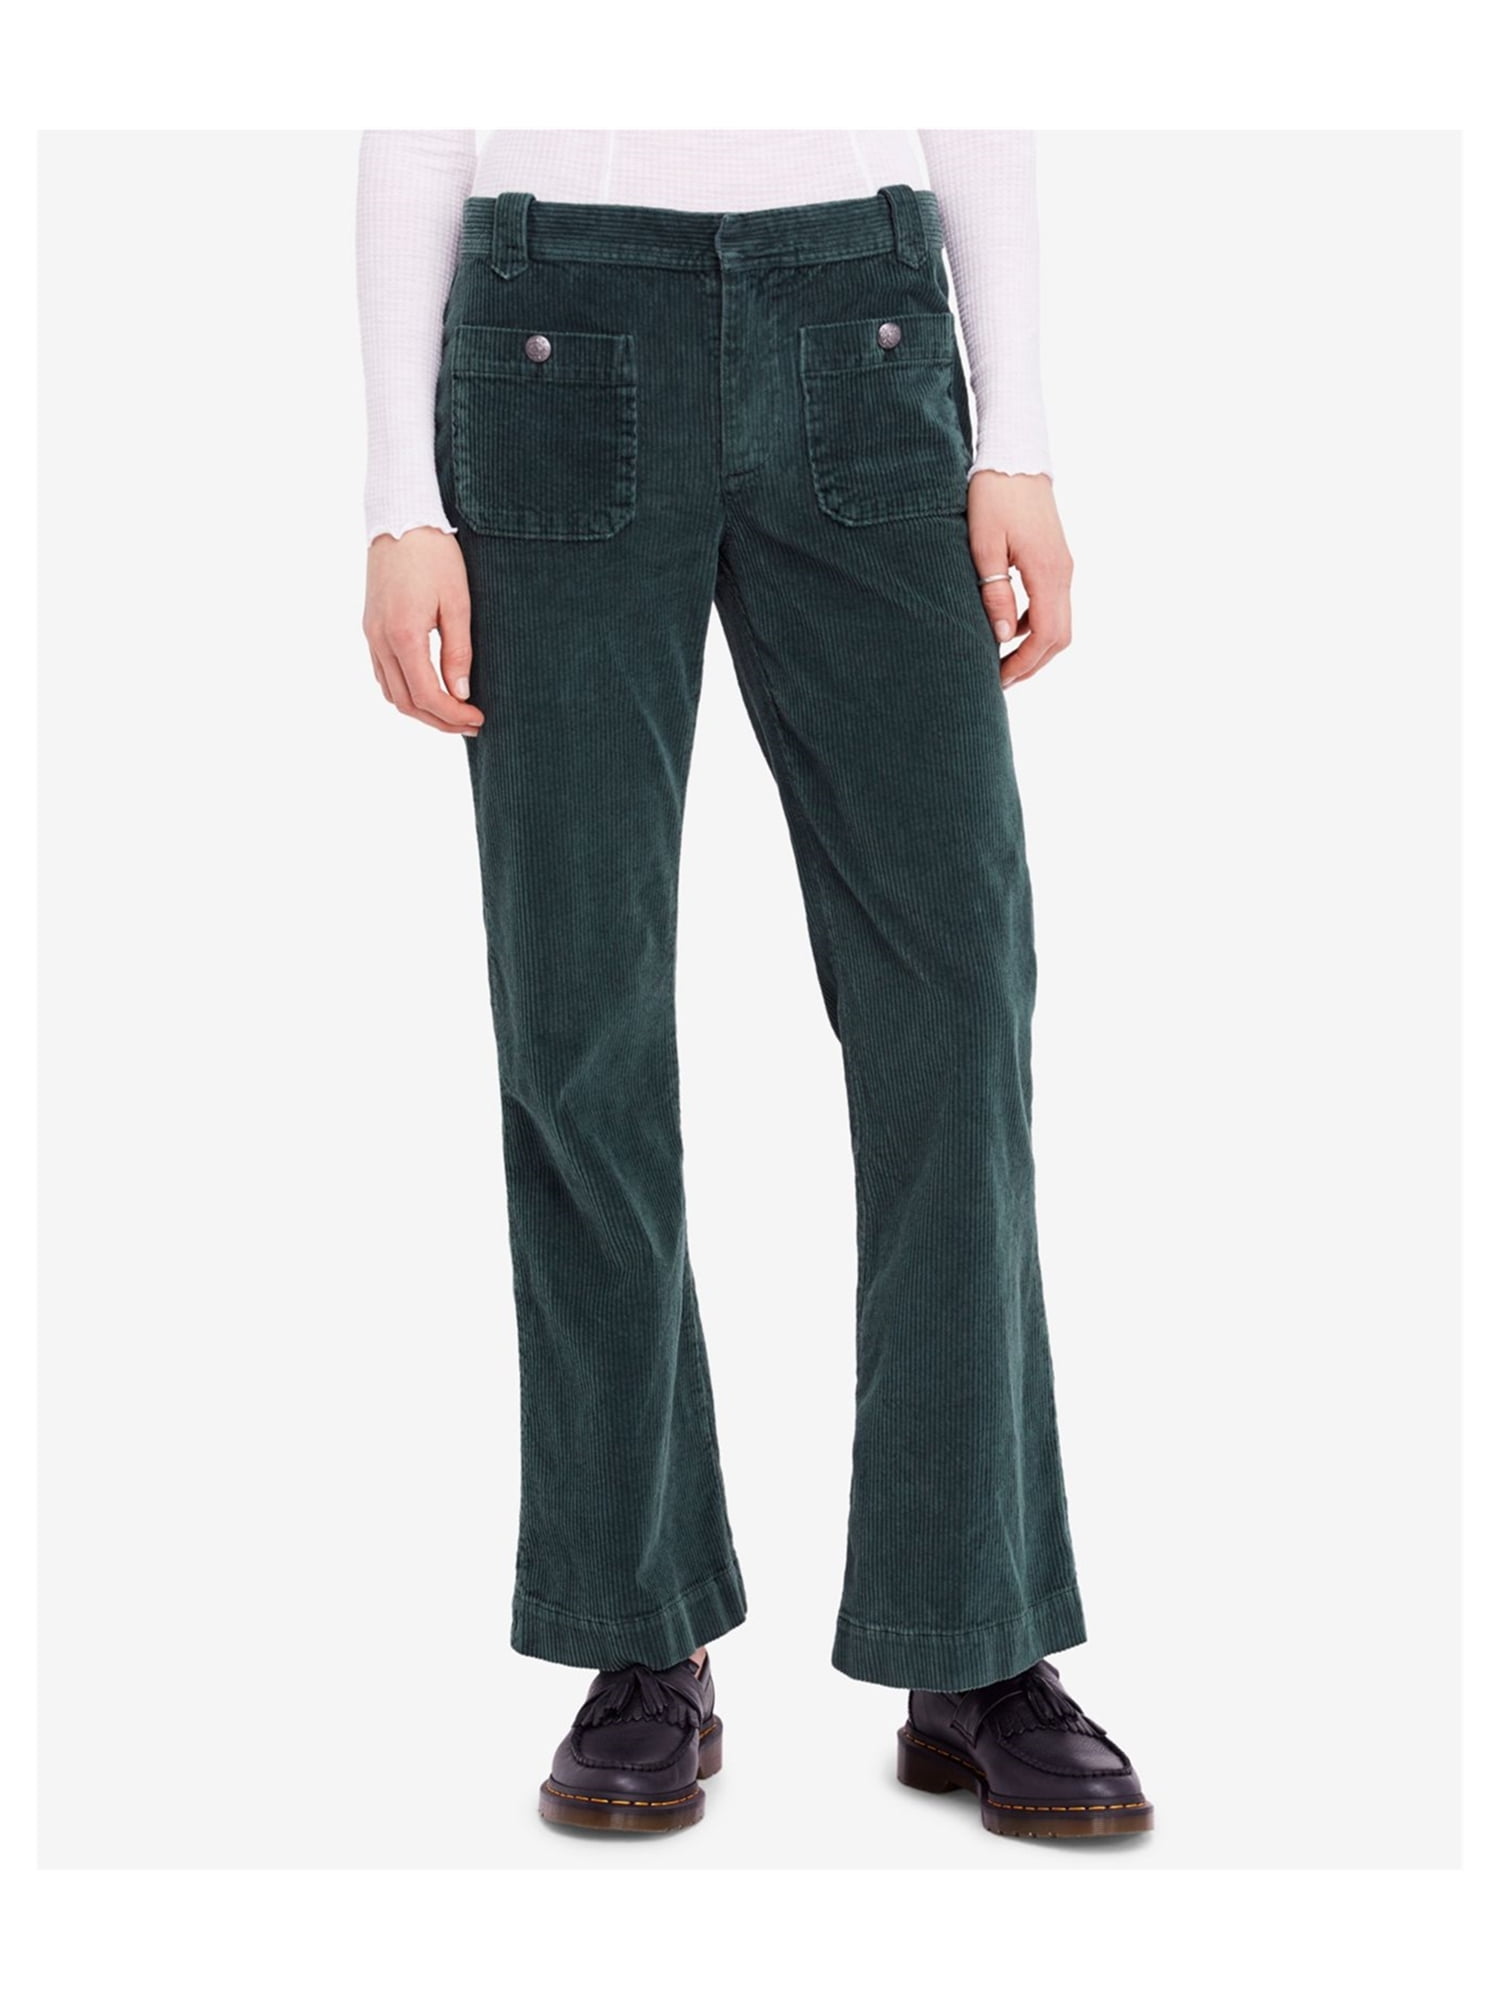 green corduroy pants womens